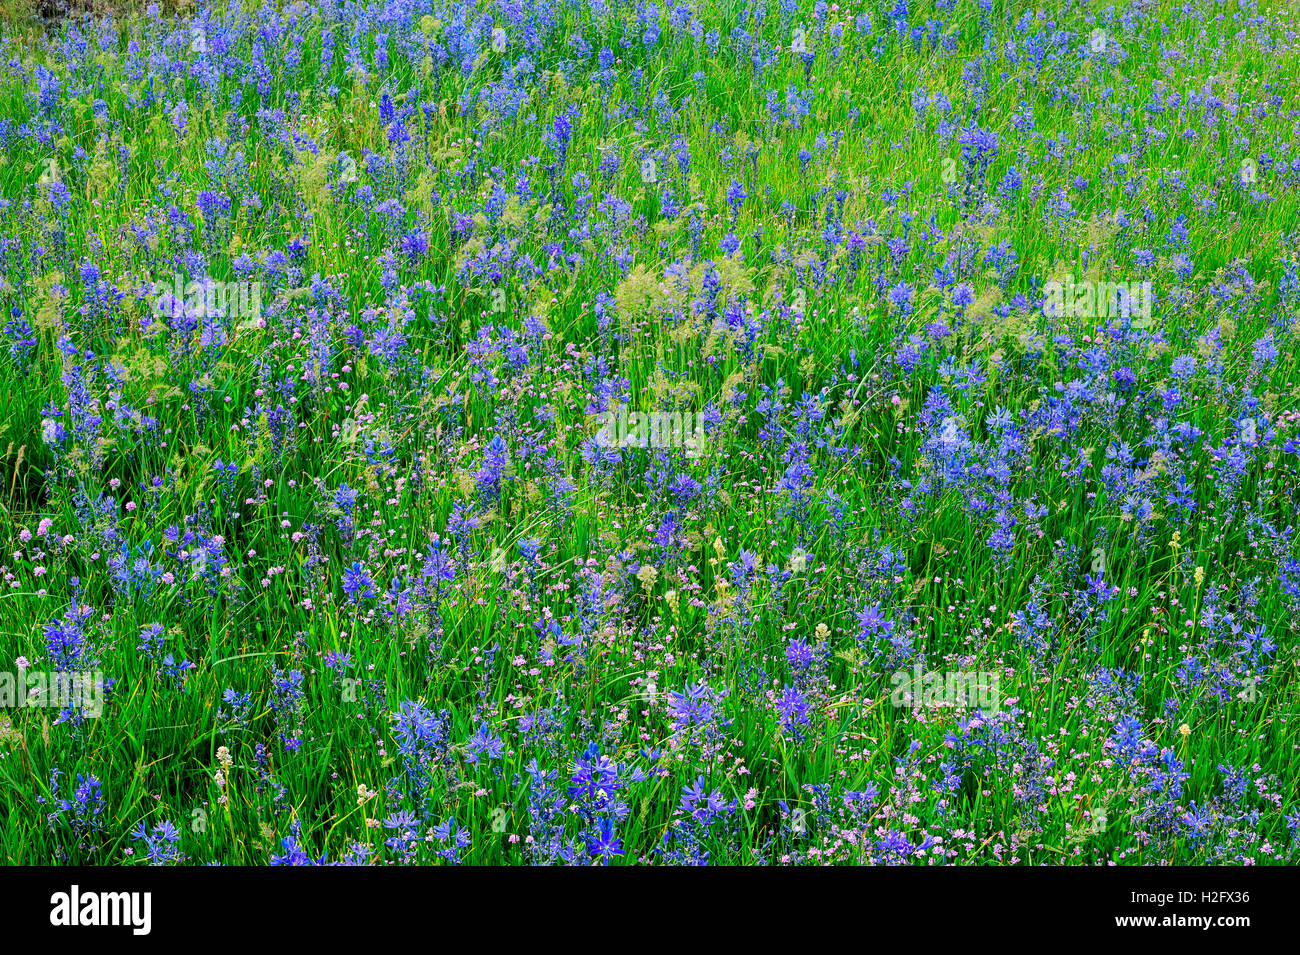 USA, Washington, Columbia River Gorge National Scenic Area, Common camas bloom in Catherine Creek area. Stock Photo